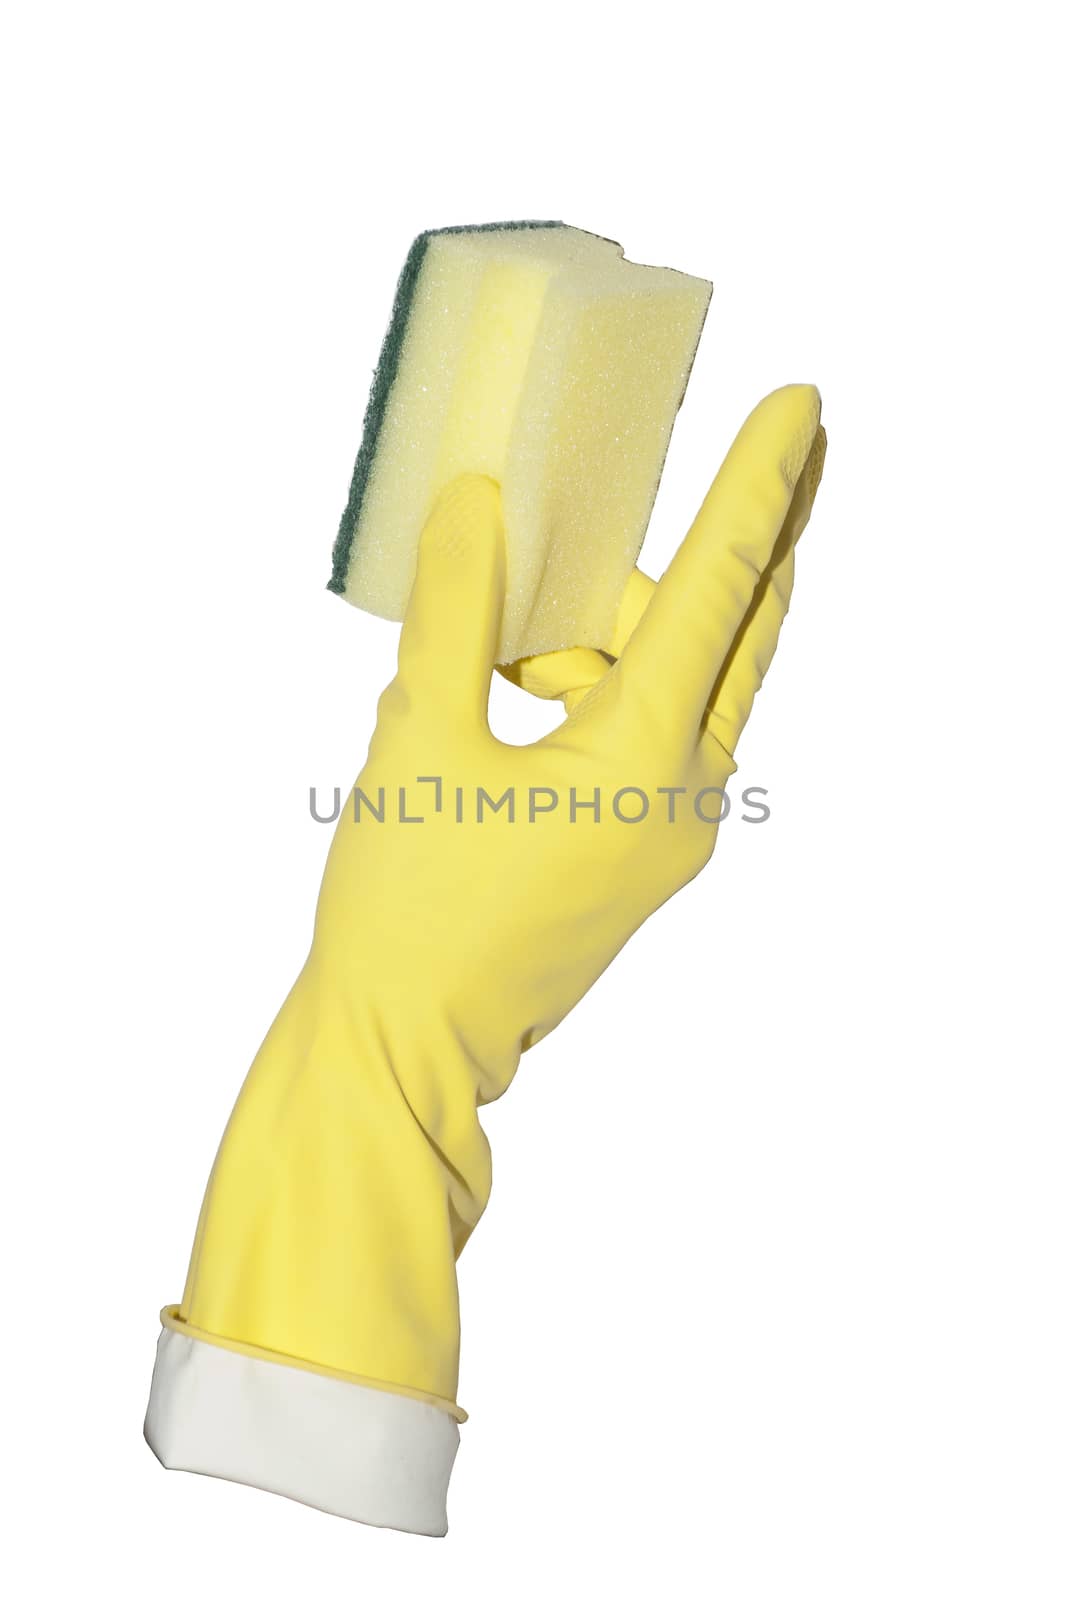 yellow glove holds profiled household sponge